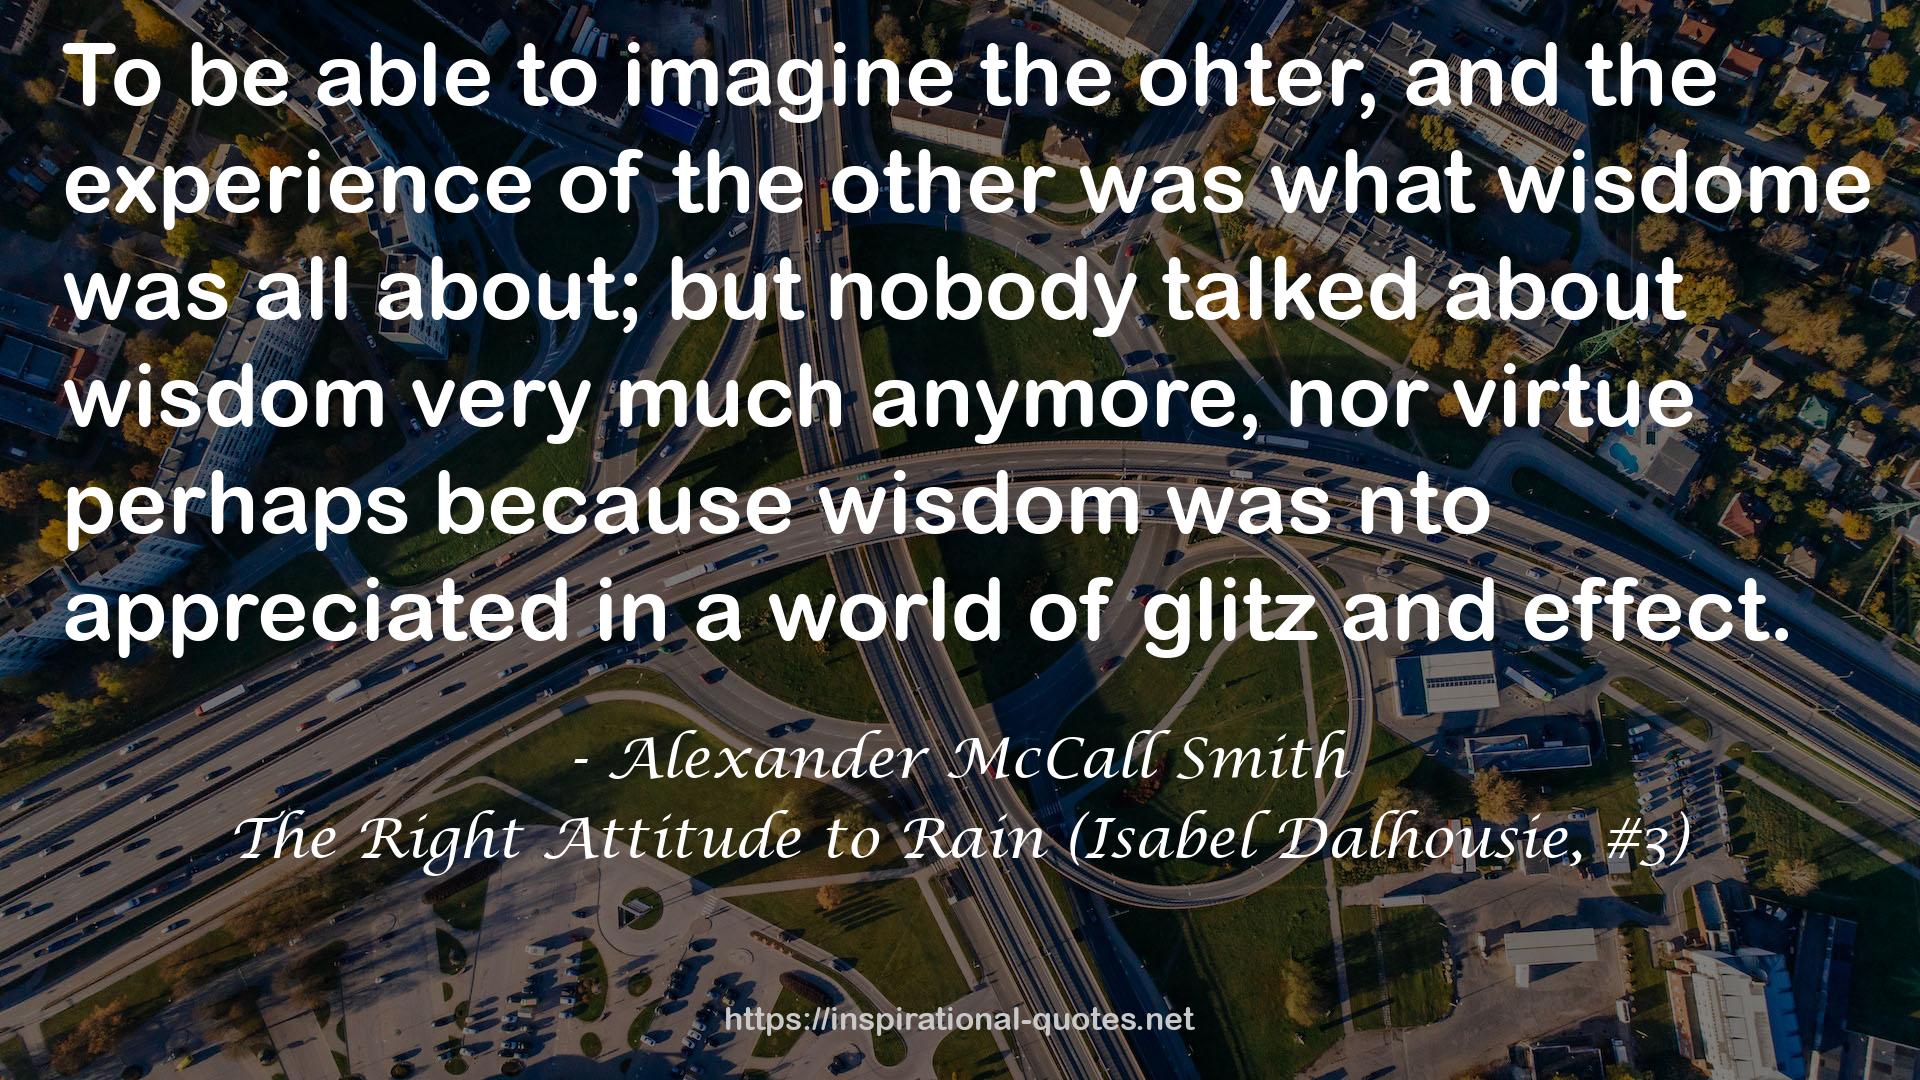 The Right Attitude to Rain (Isabel Dalhousie, #3) QUOTES